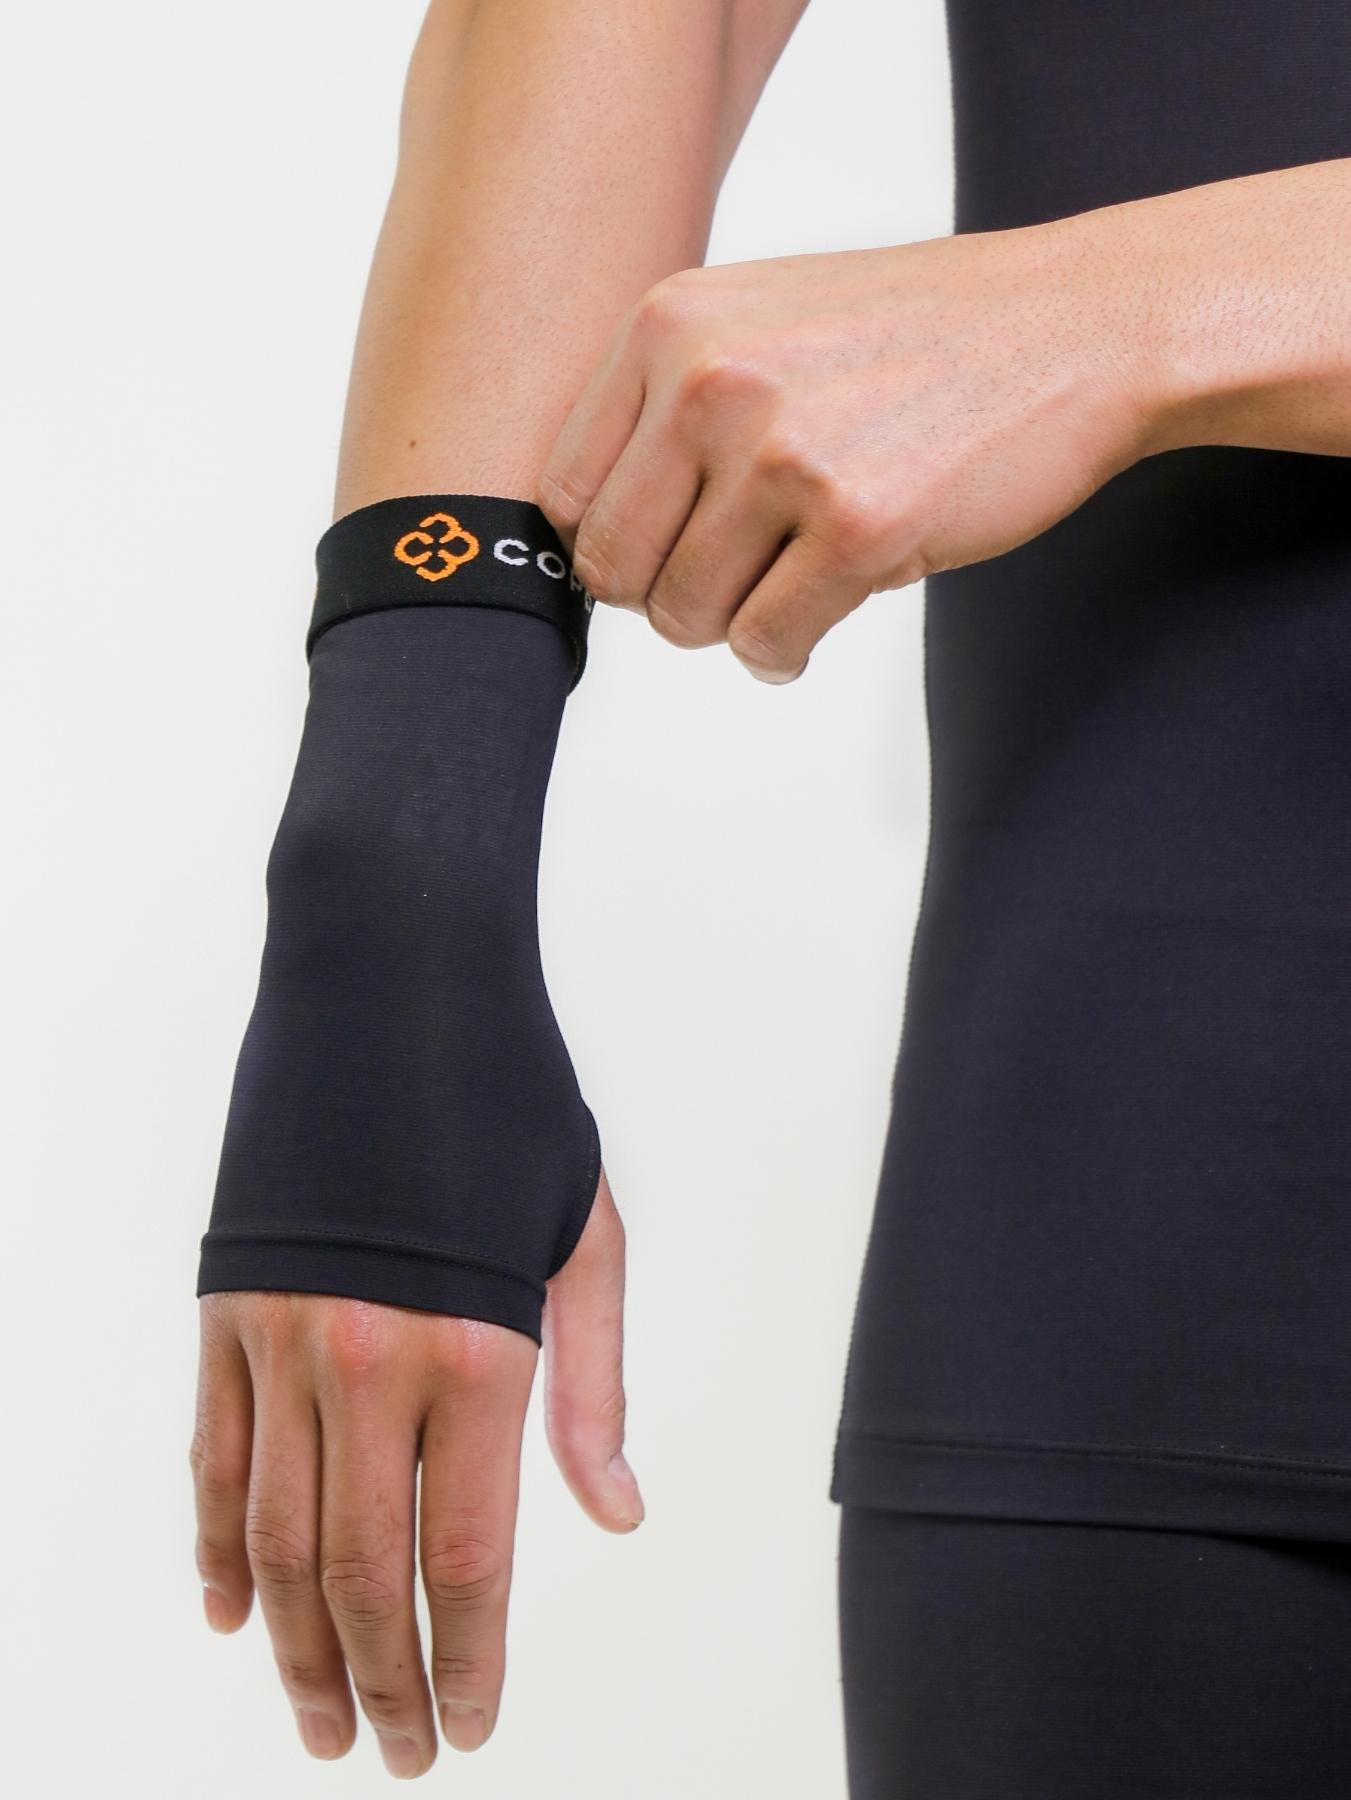 Copper Compression Wrist/Hand Sleeve - Unisex – Copper 88